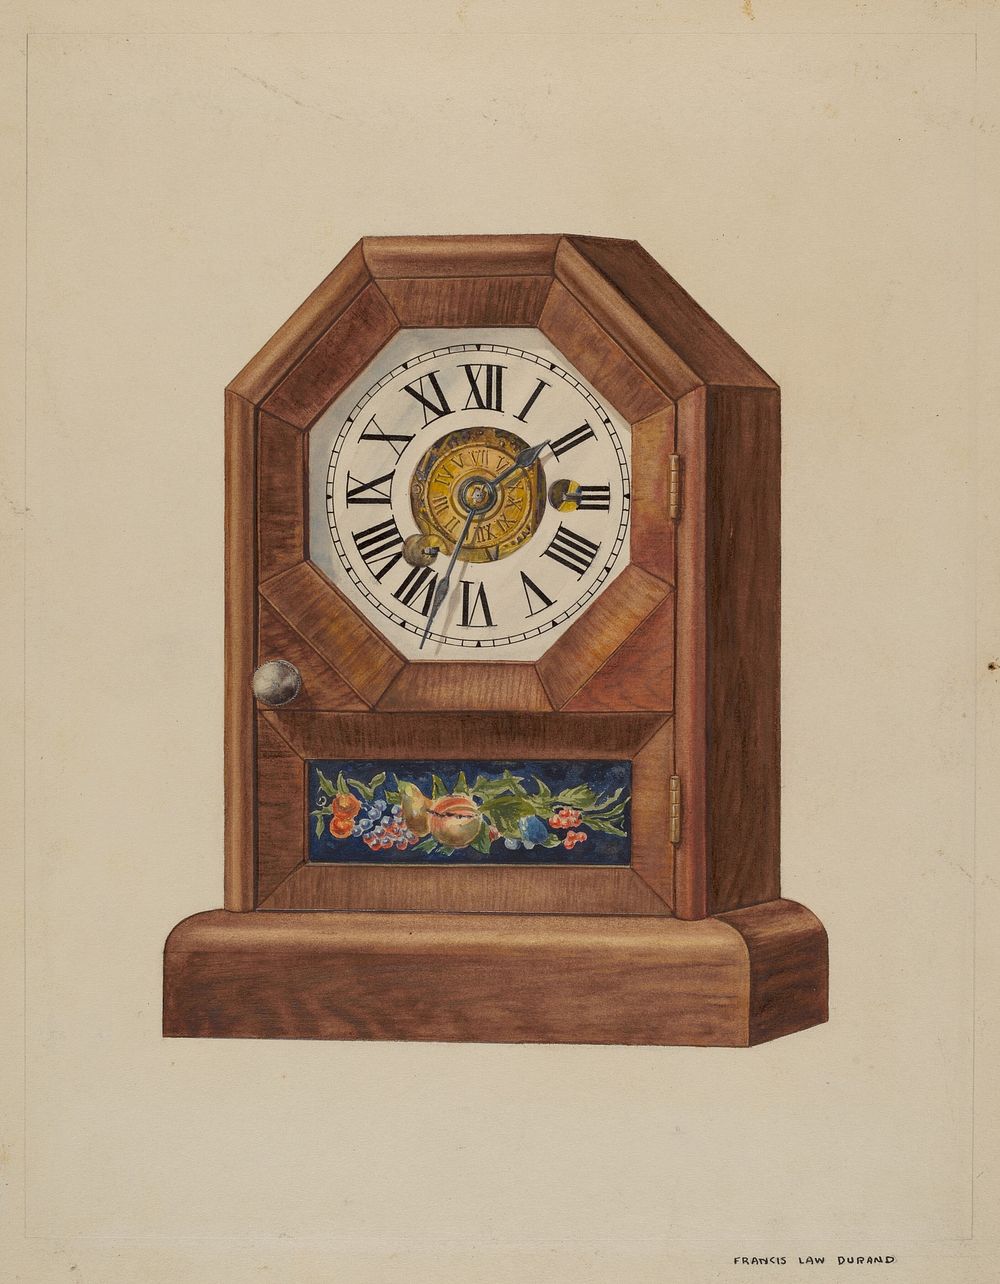 Alarm Clock (Timepiece) (ca. 1937) by Francis Law Durand.  